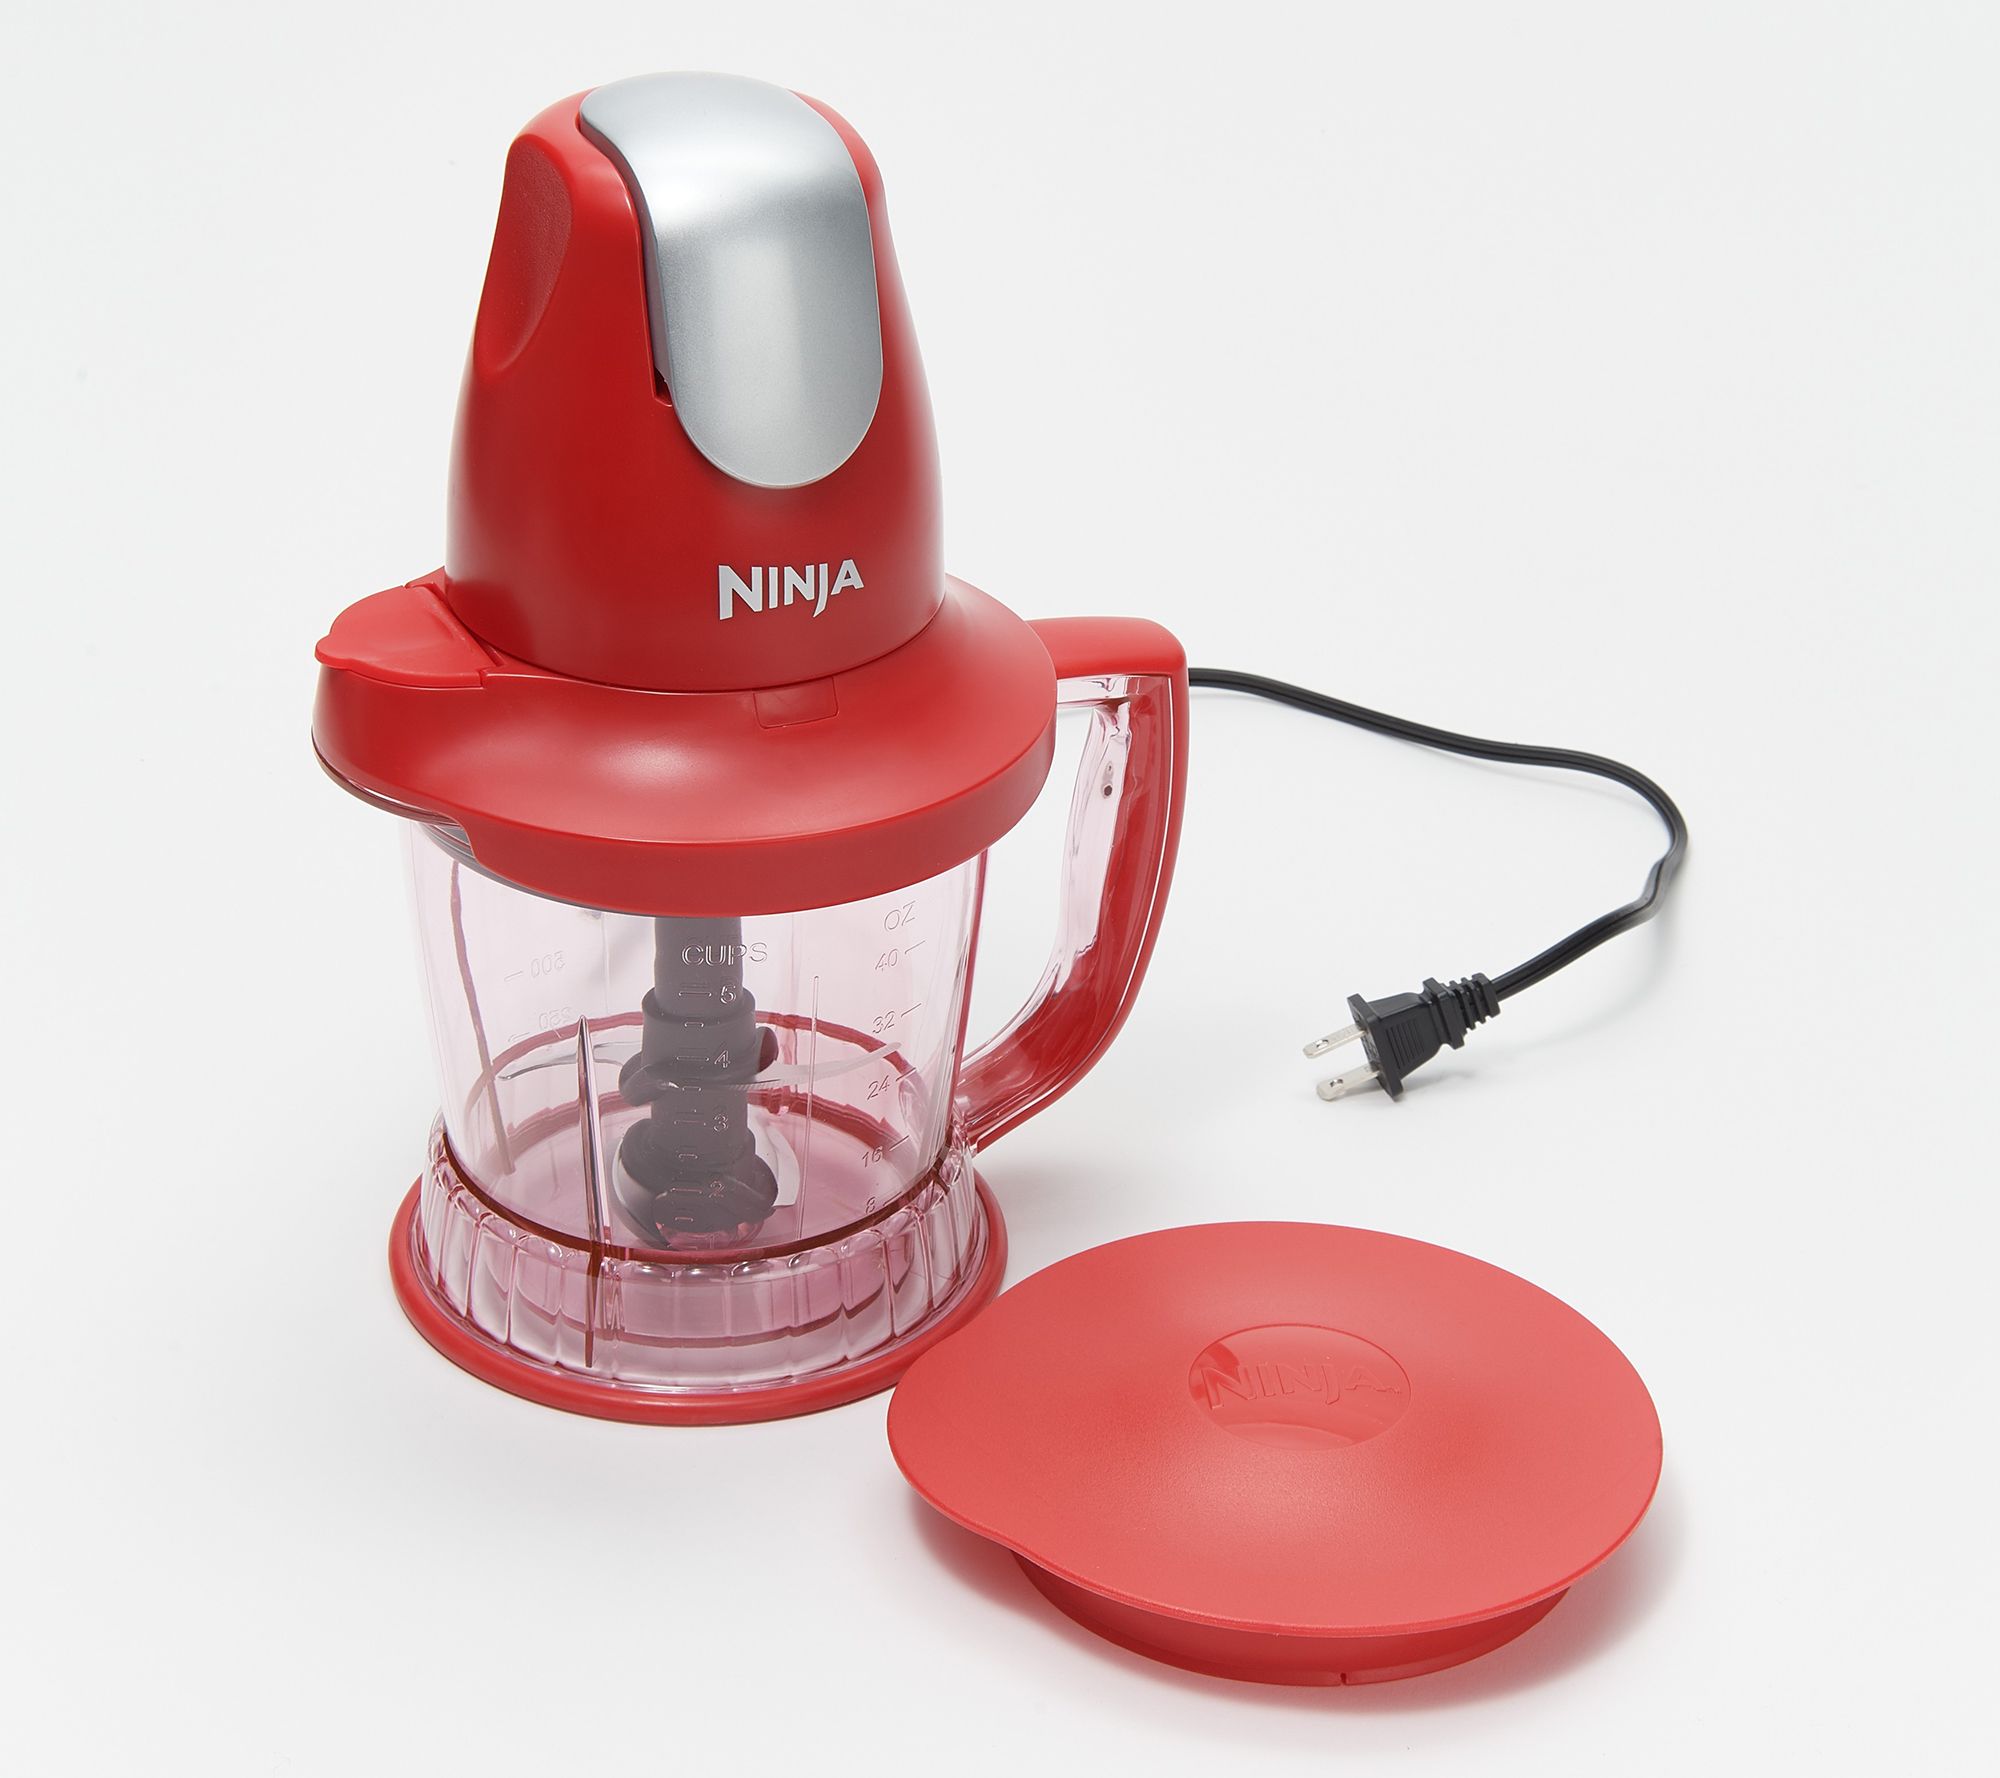 Ninja Storm 450-Watt 40 oz. Food and Drink Maker with Recipes